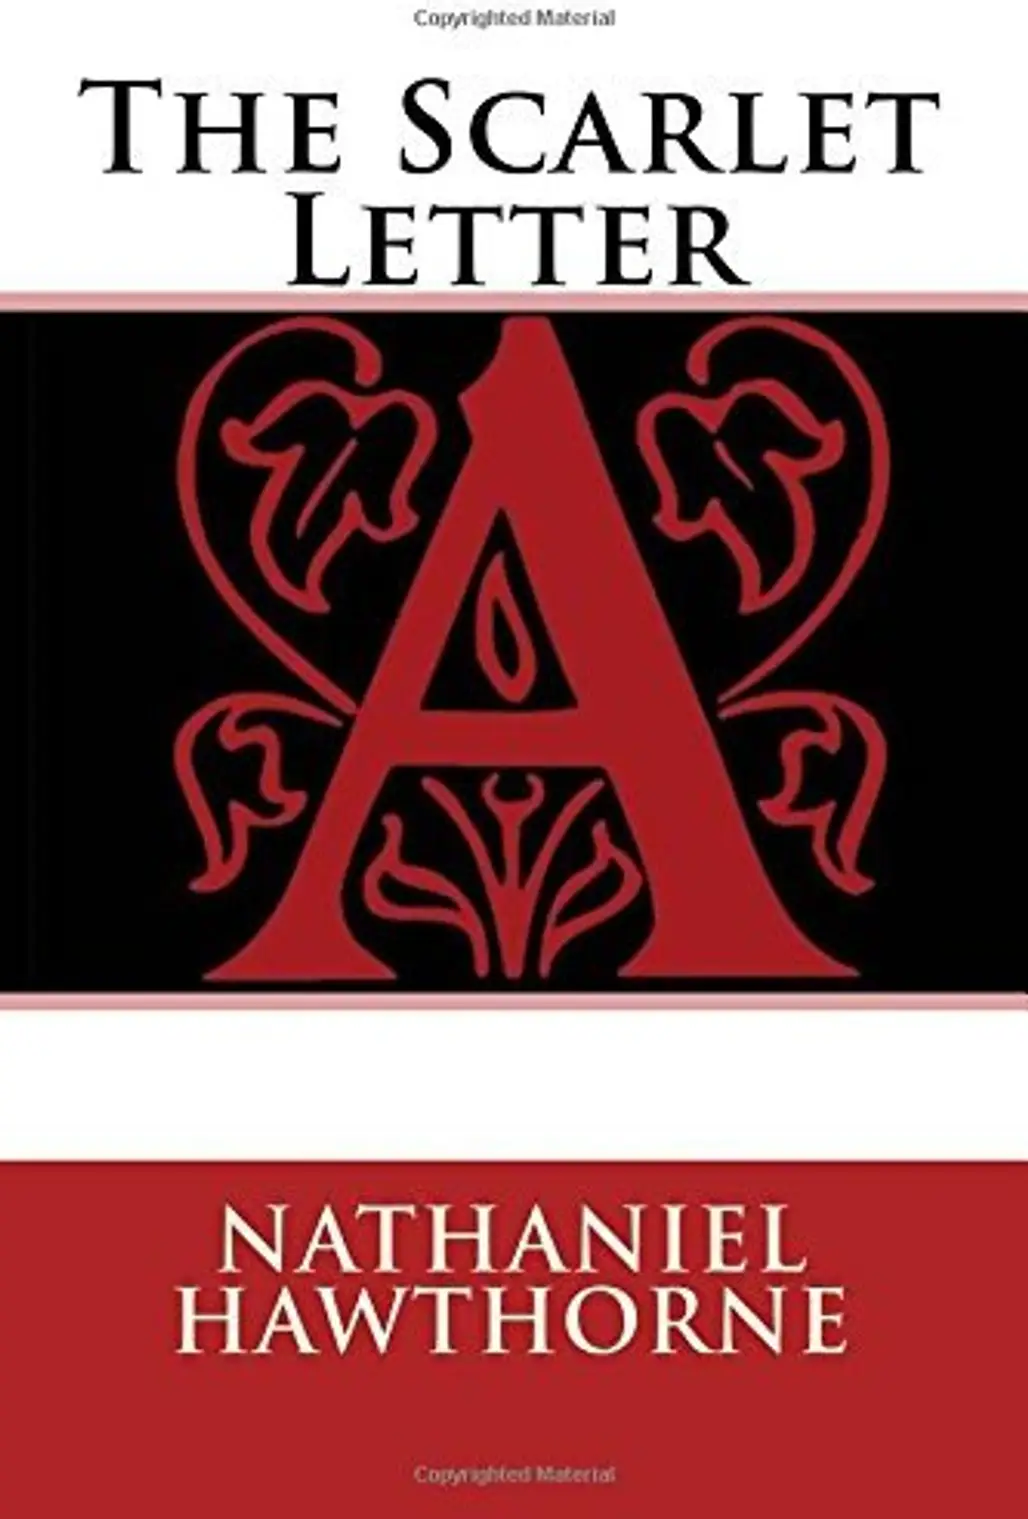 The Scarlett Letter by Nathaniel Hawthorne